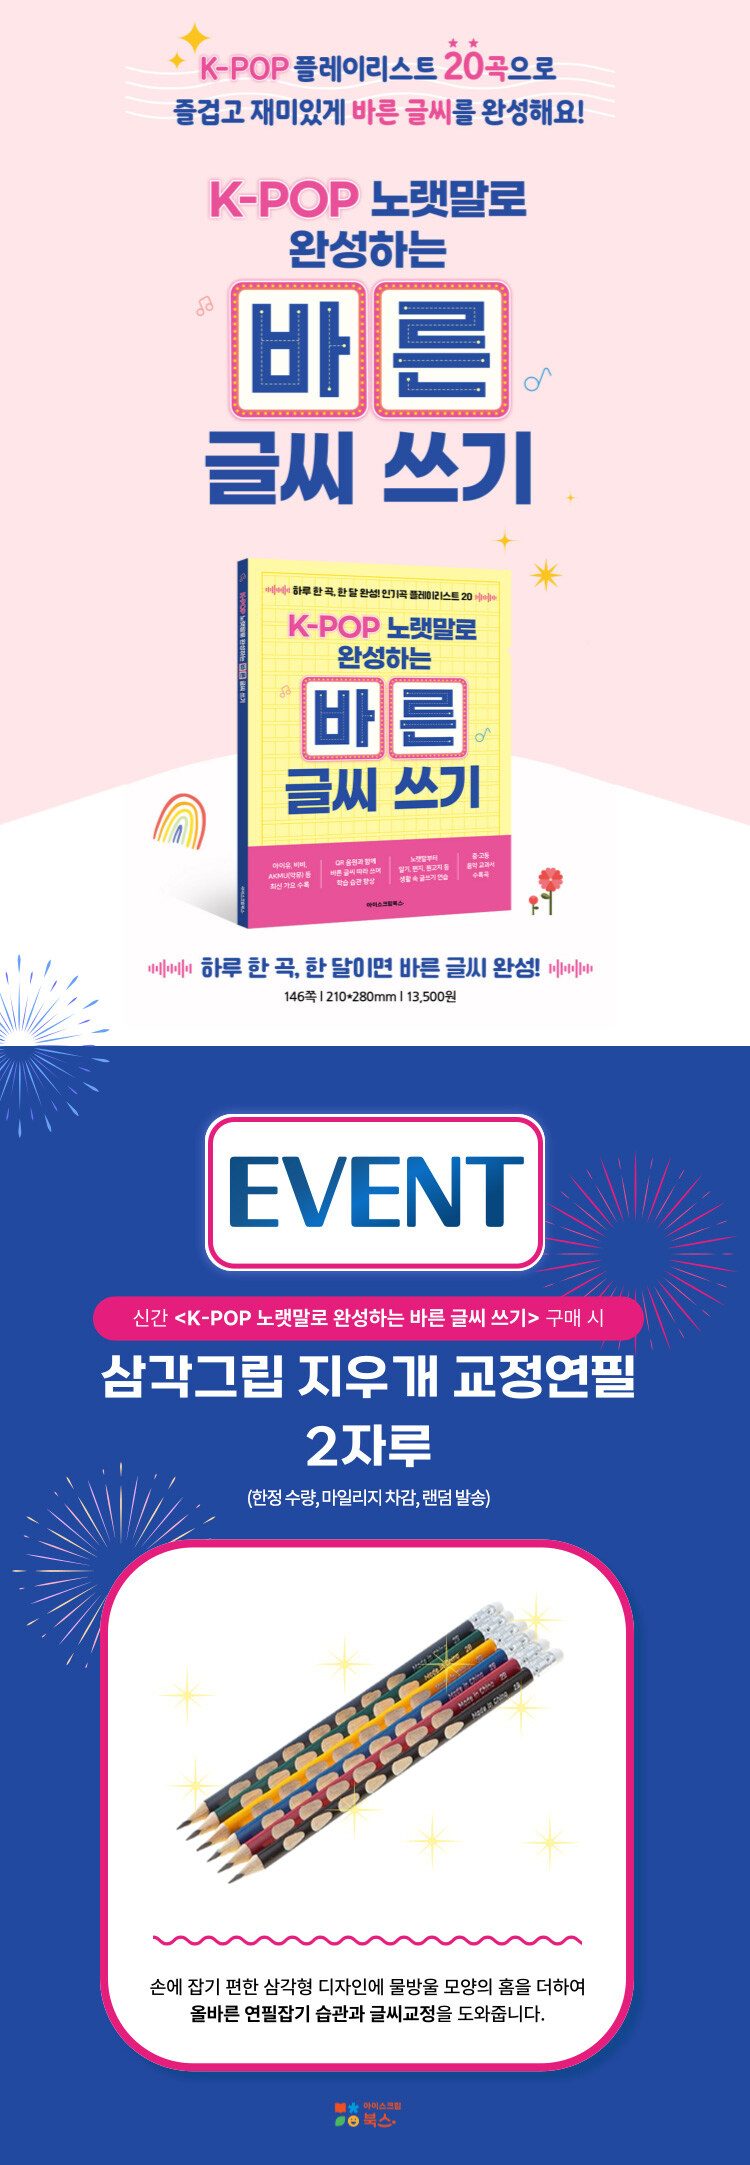 <K-POP 노랫말로 완성하는 바른 글씨 쓰기> 출간 기념 이벤트